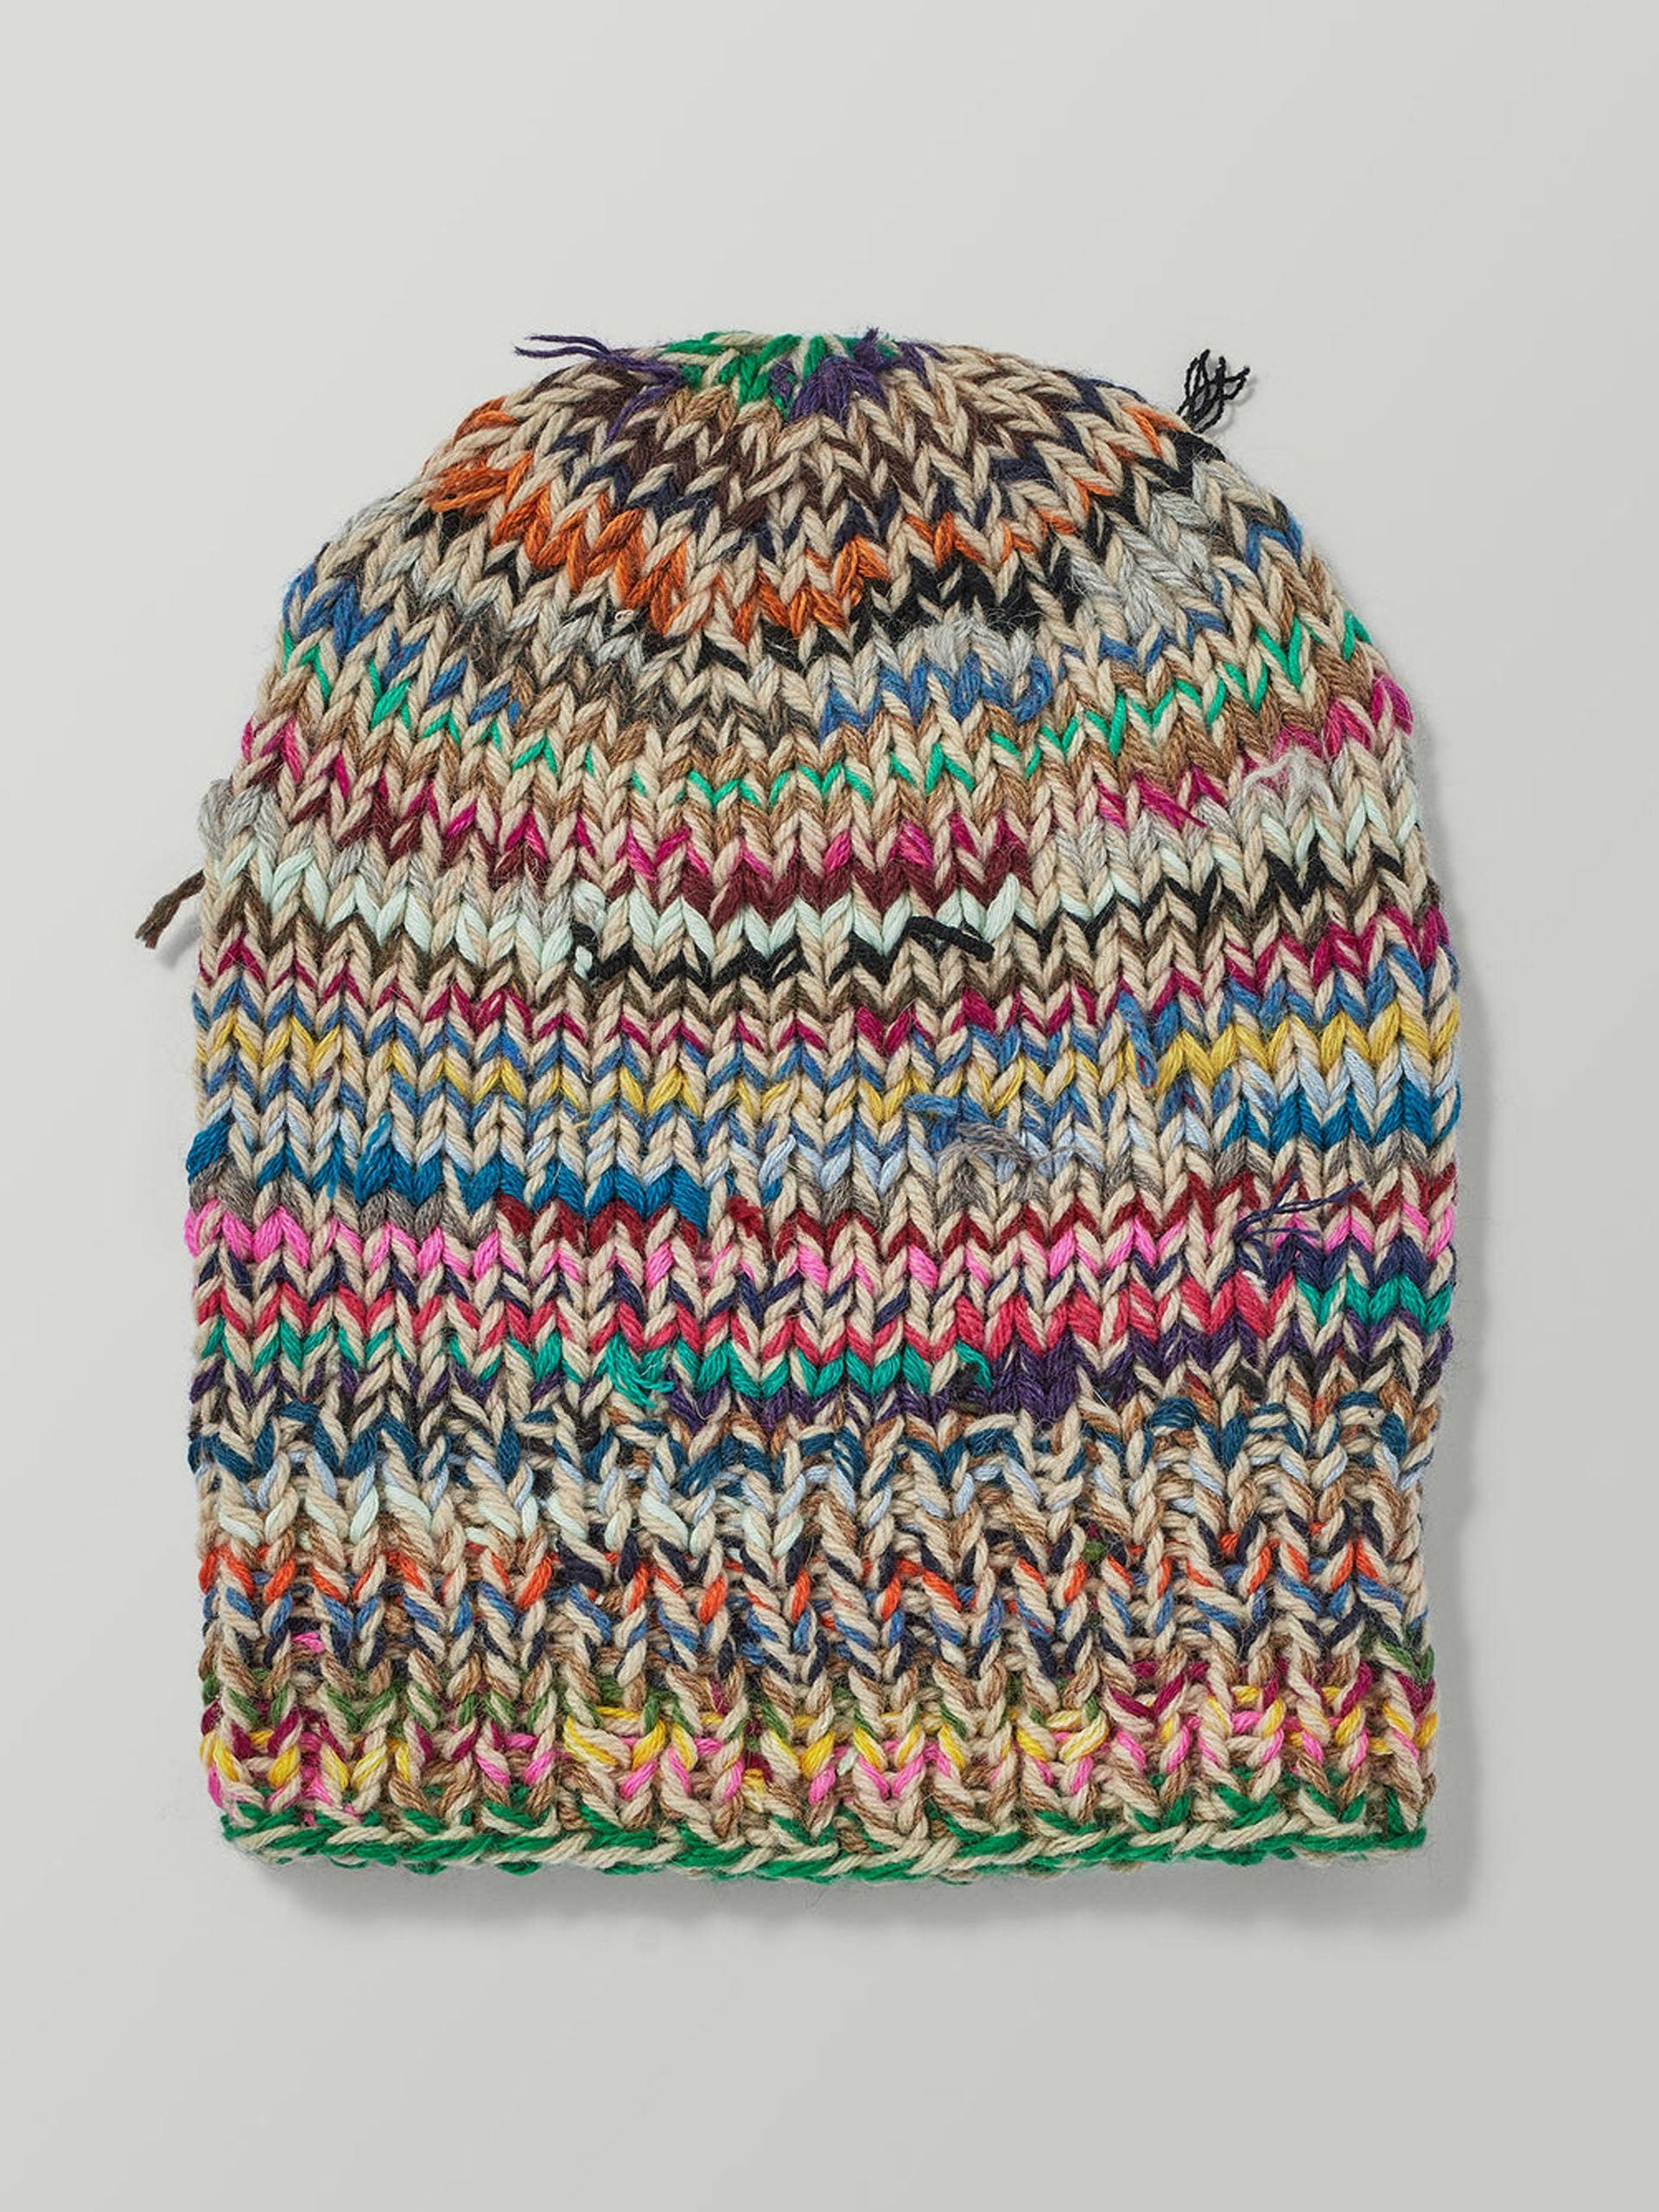 Repurposed yarn hand knitted hat